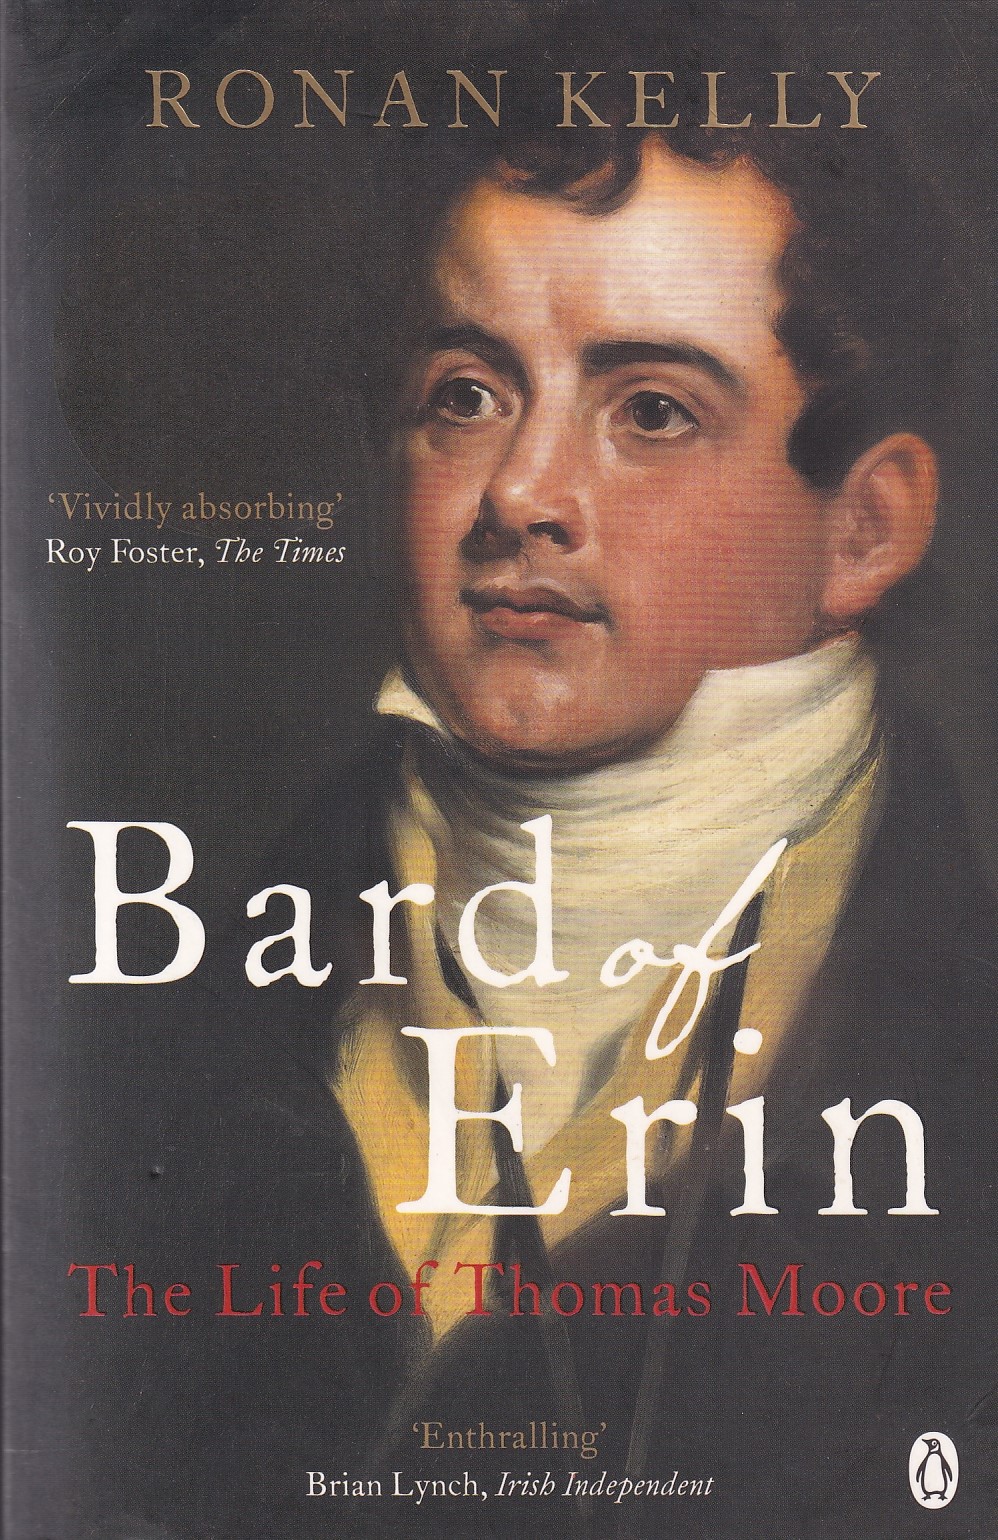 Bard of Erin: The Life of Thomas Moore by Ronan Kelly